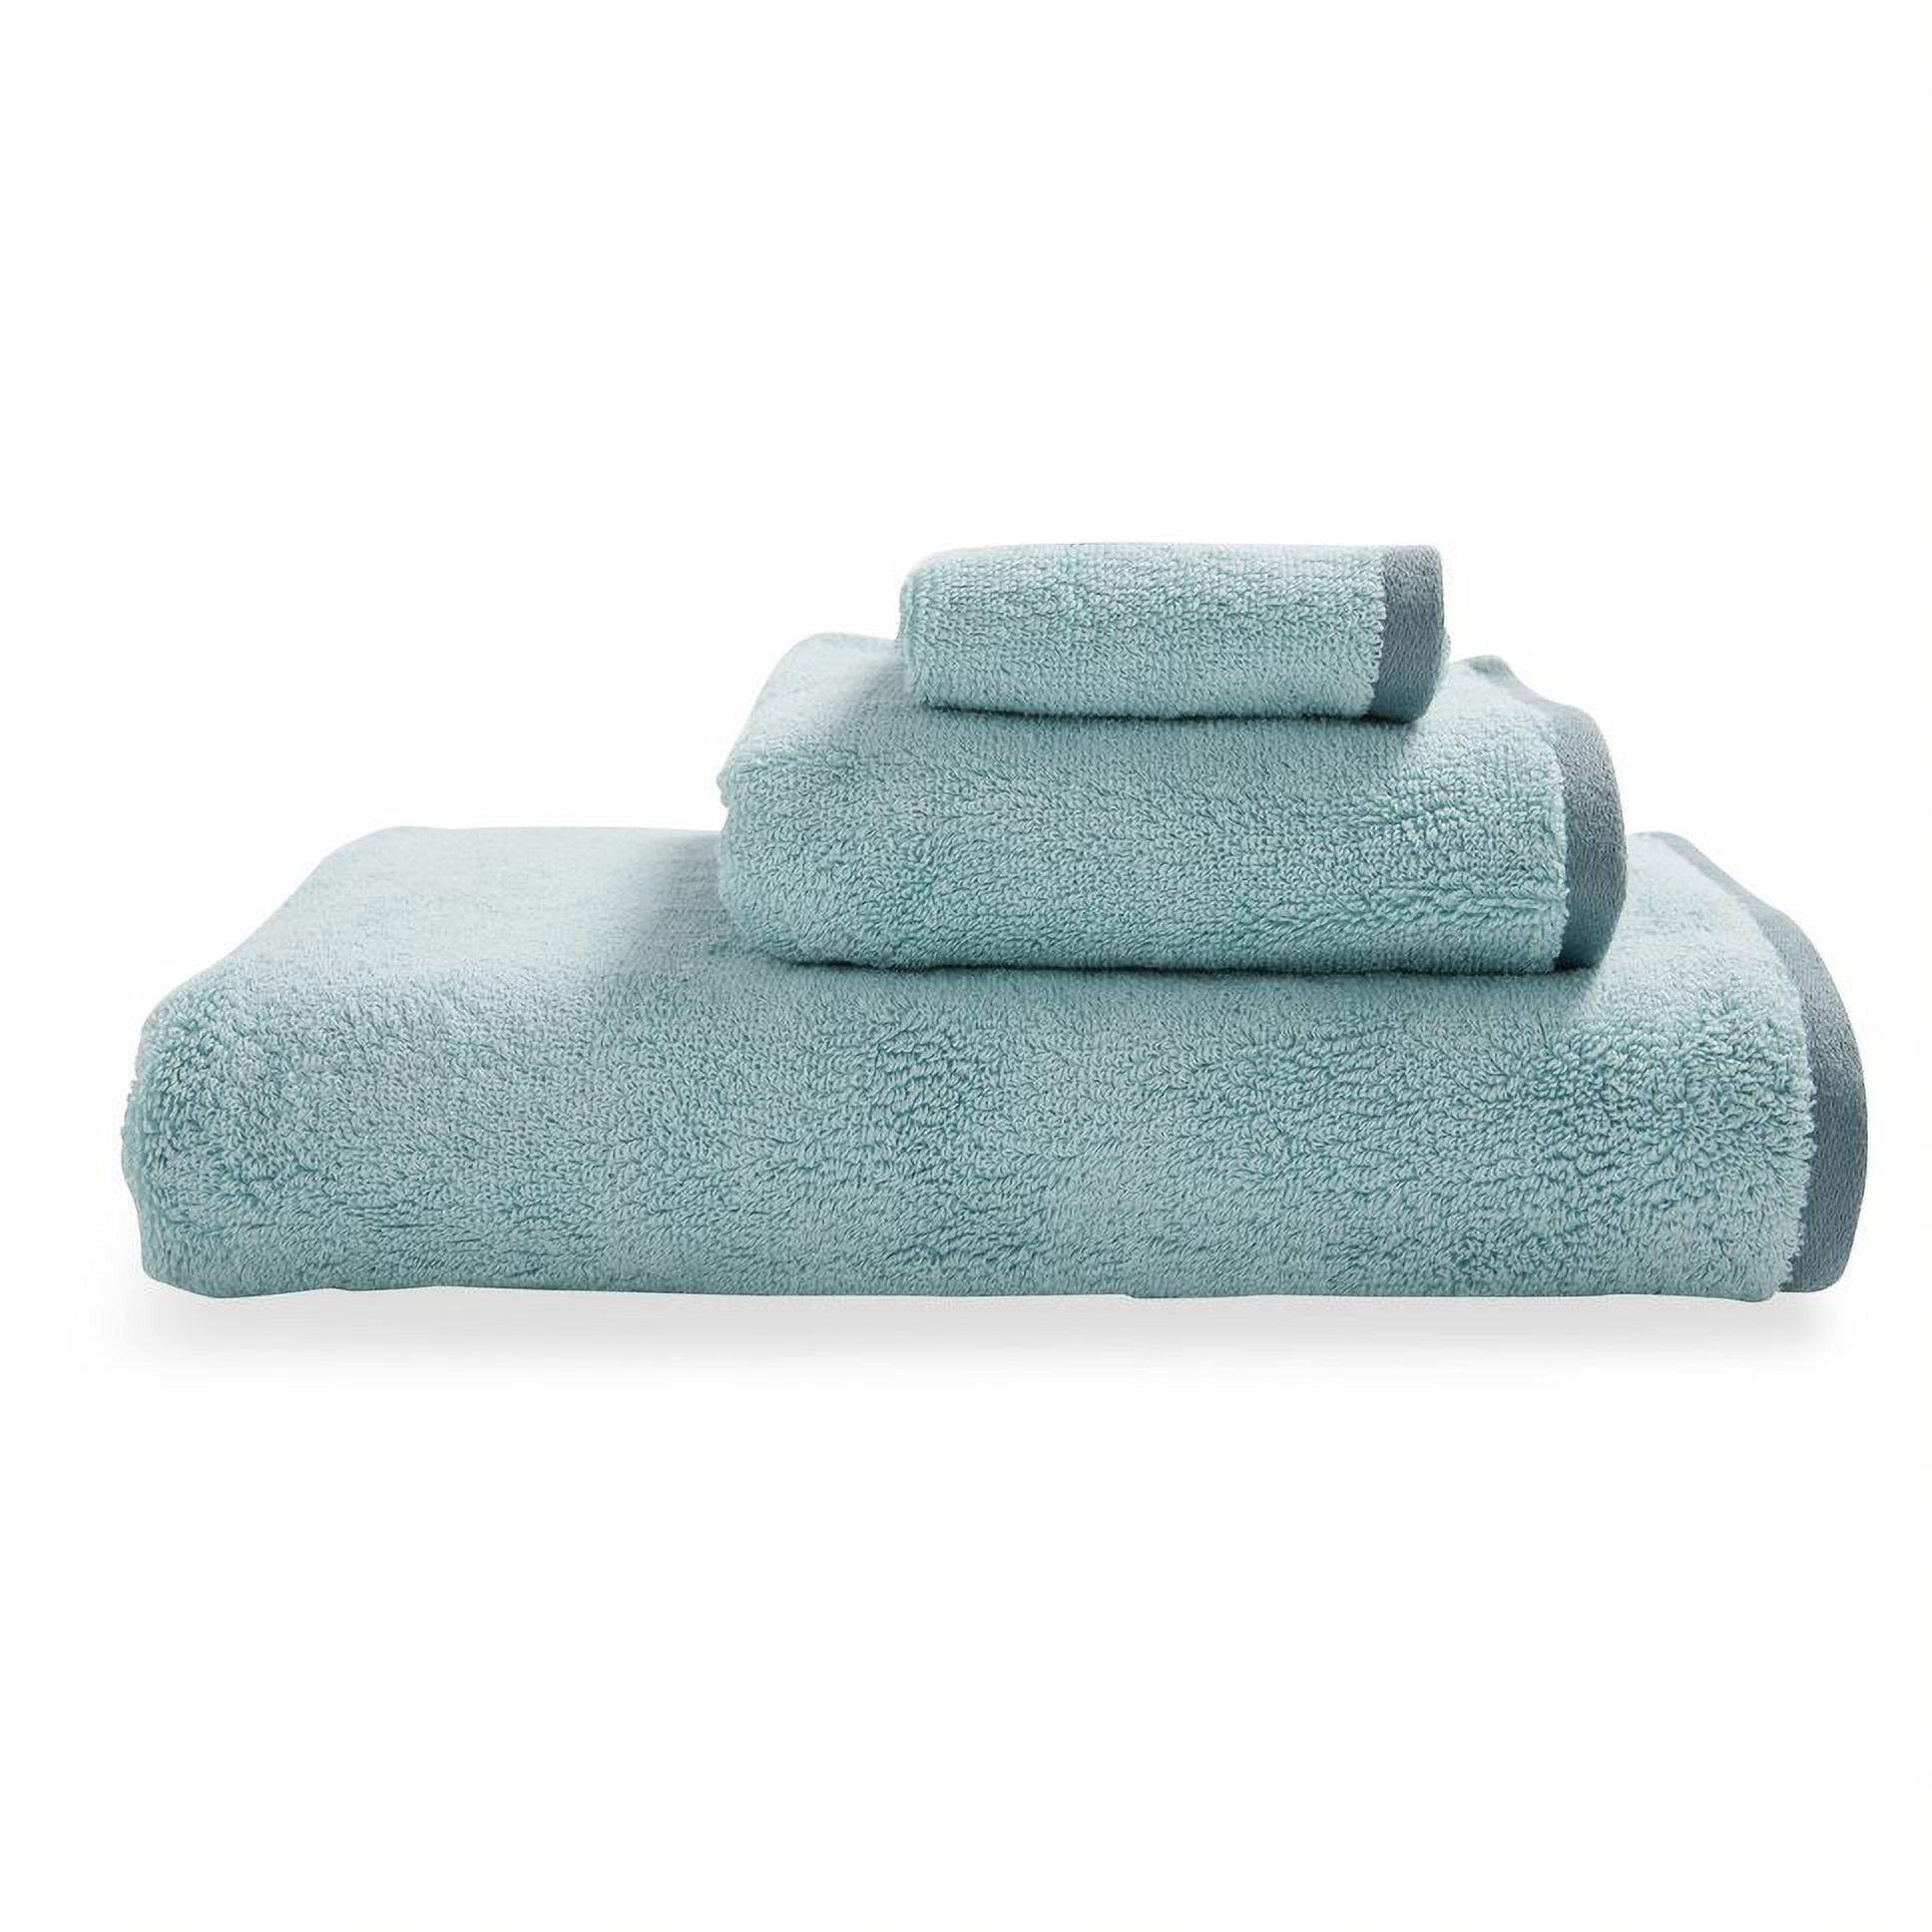 Soft Teal/Sea Gray 3 Piece Towel Set, MoDRN Hemp Towel Collection - image 2 of 2